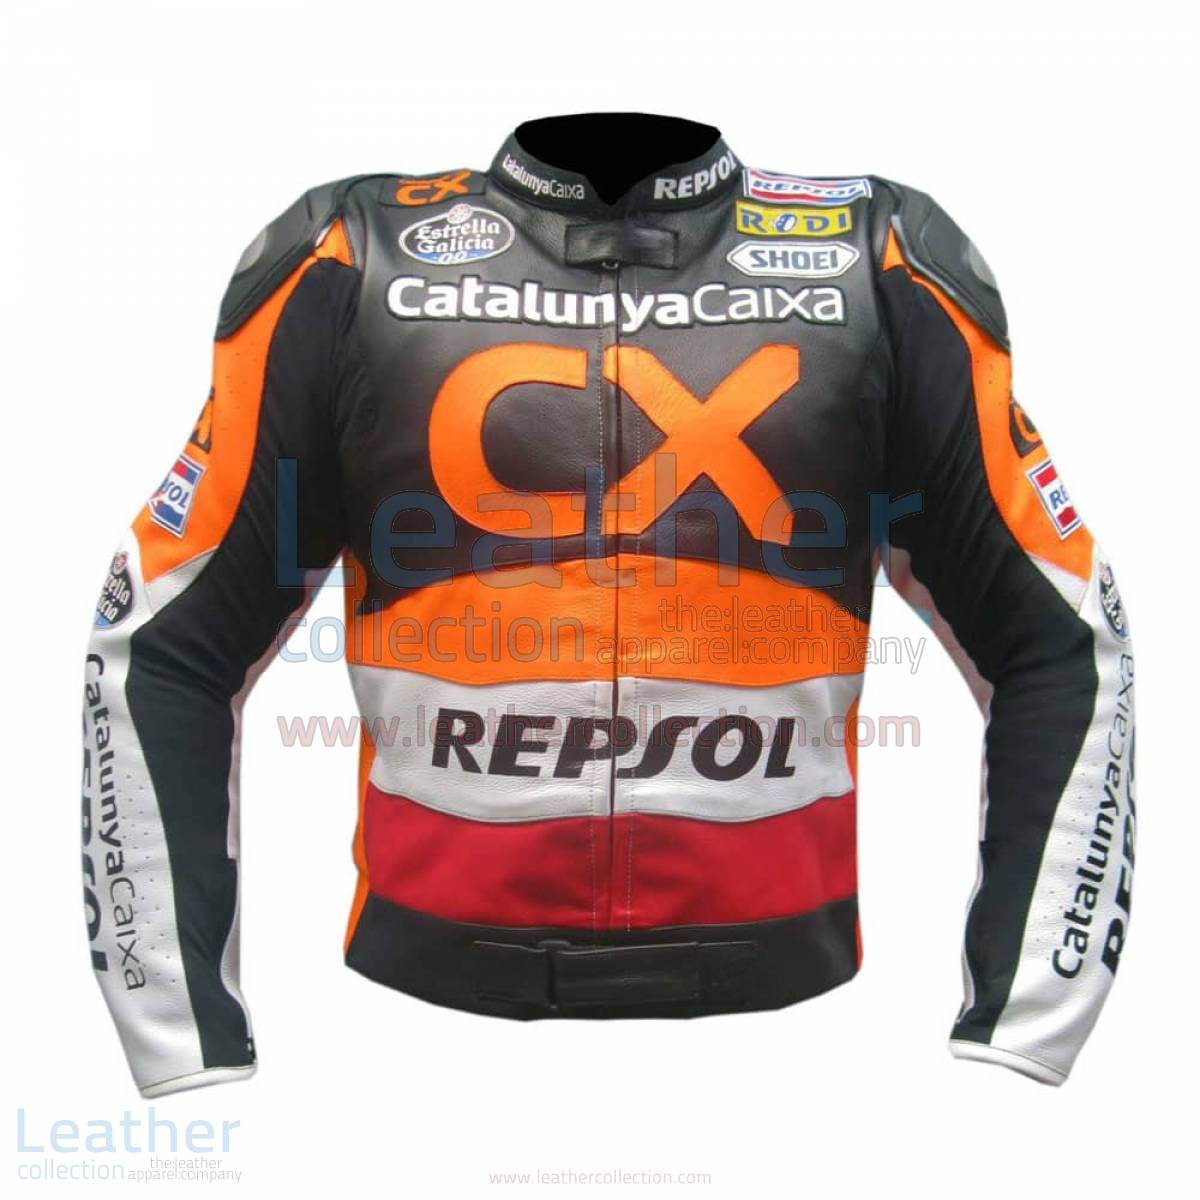 Repsol CX Leather Race Jacket